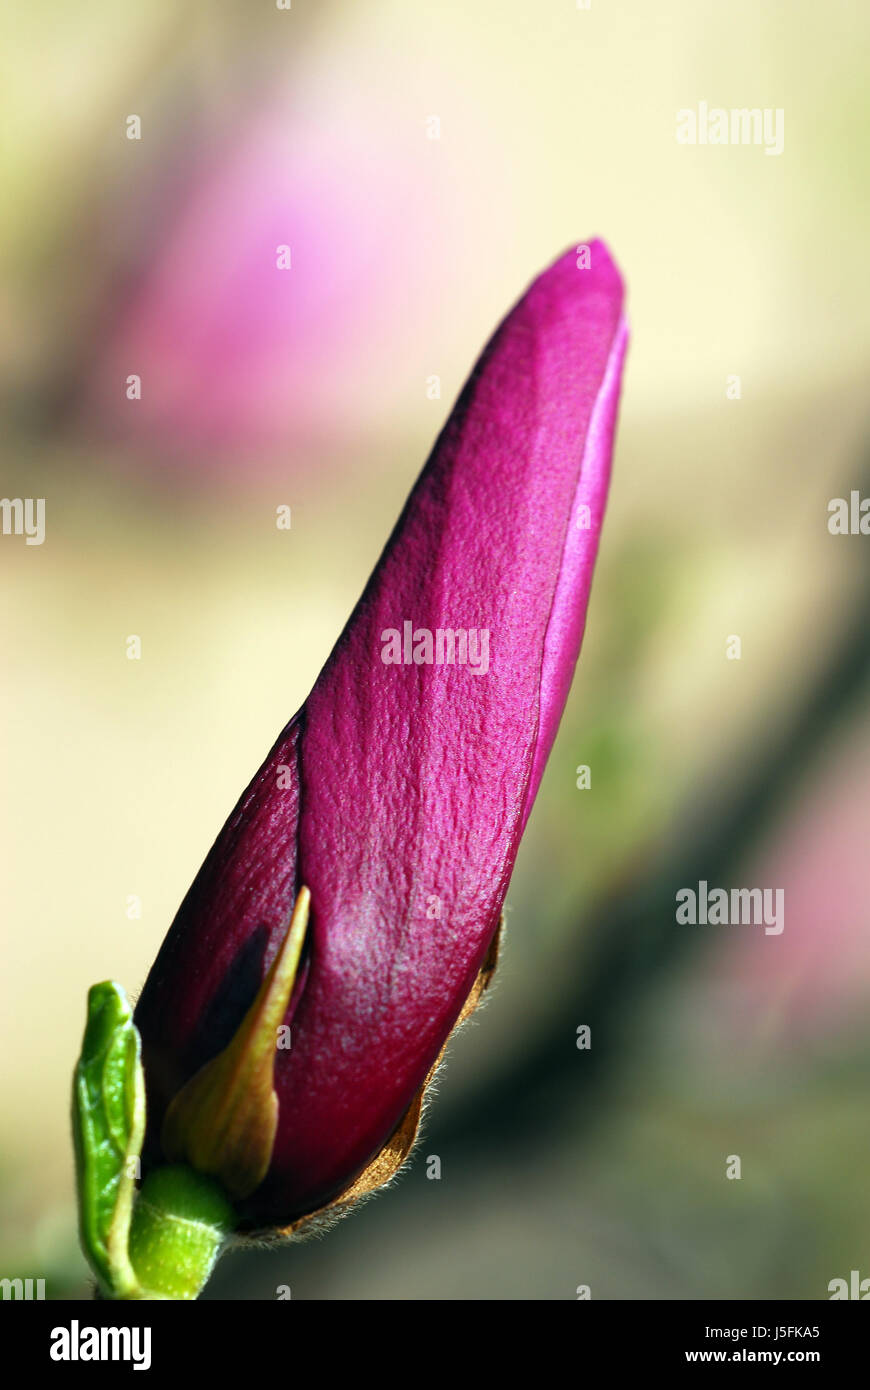 plant bloom blossom flourish flourishing blossoms coloured purple magnolia Stock Photo